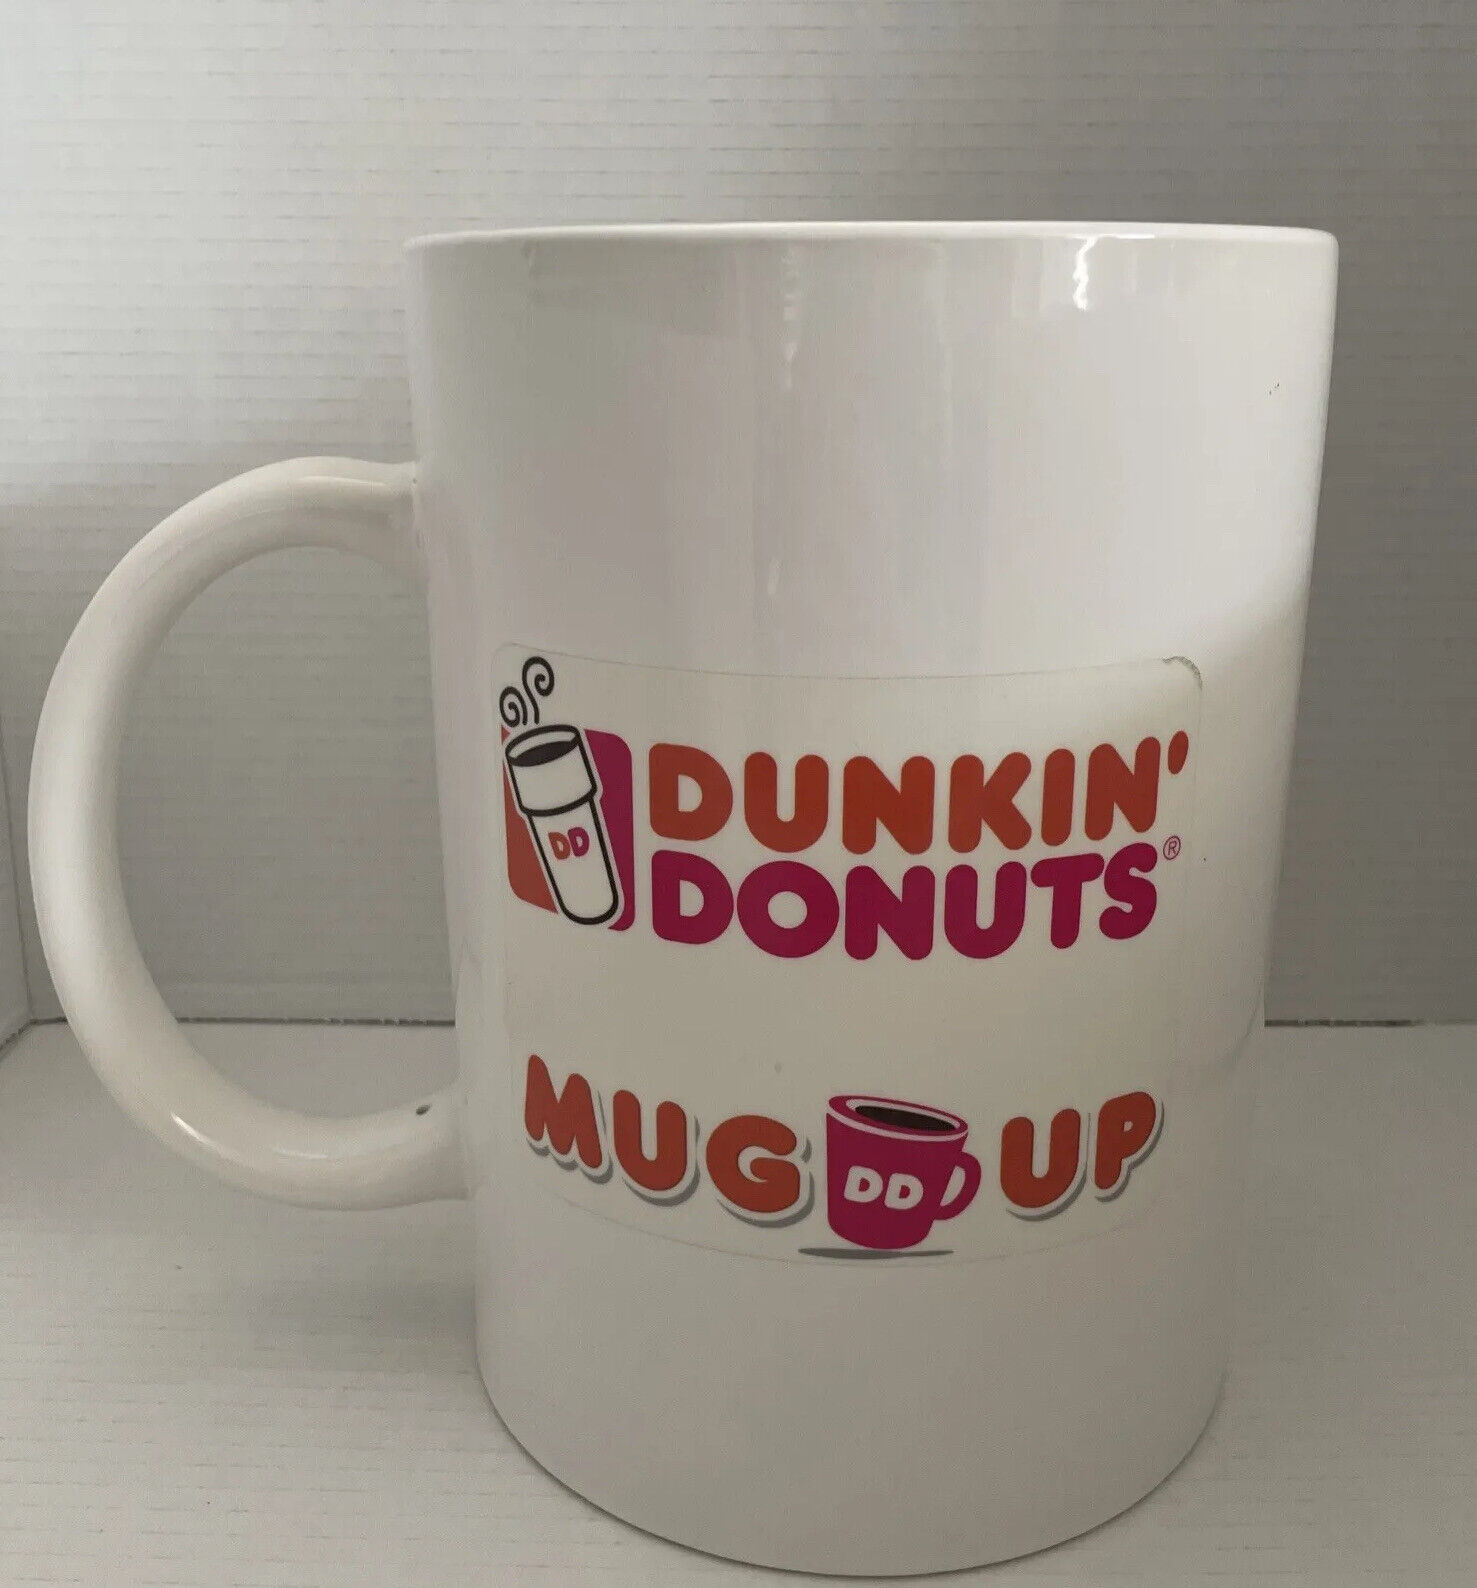 Vintage Dunkin Donuts Mug Up Extra Large Store Display Ceramic Mug 9.75” Tall